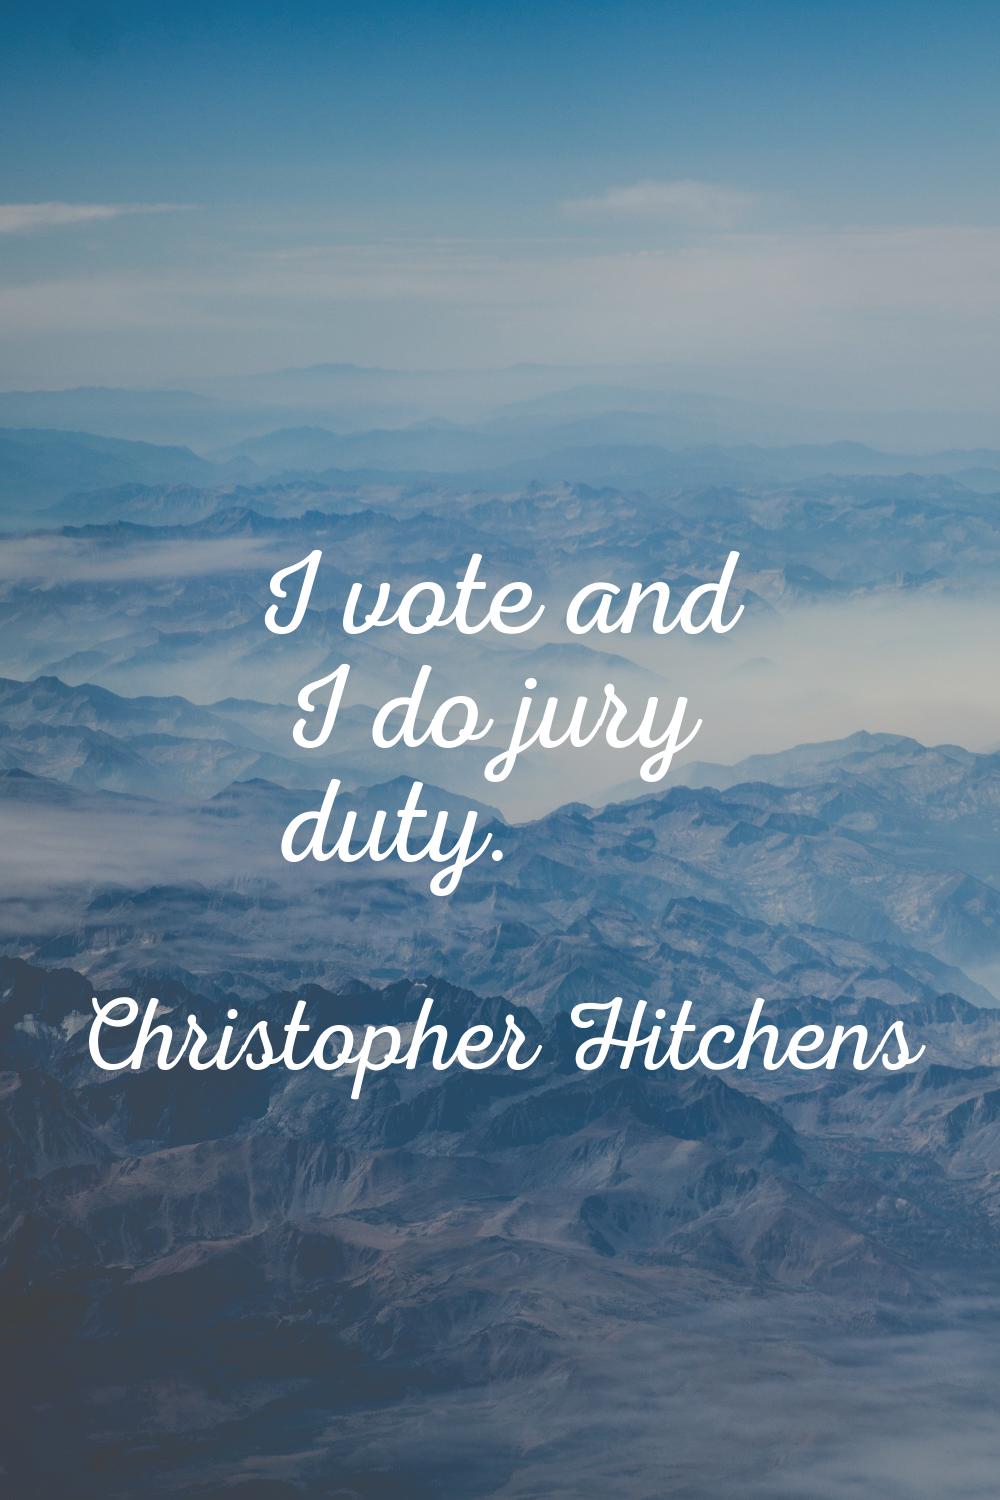 I vote and I do jury duty.